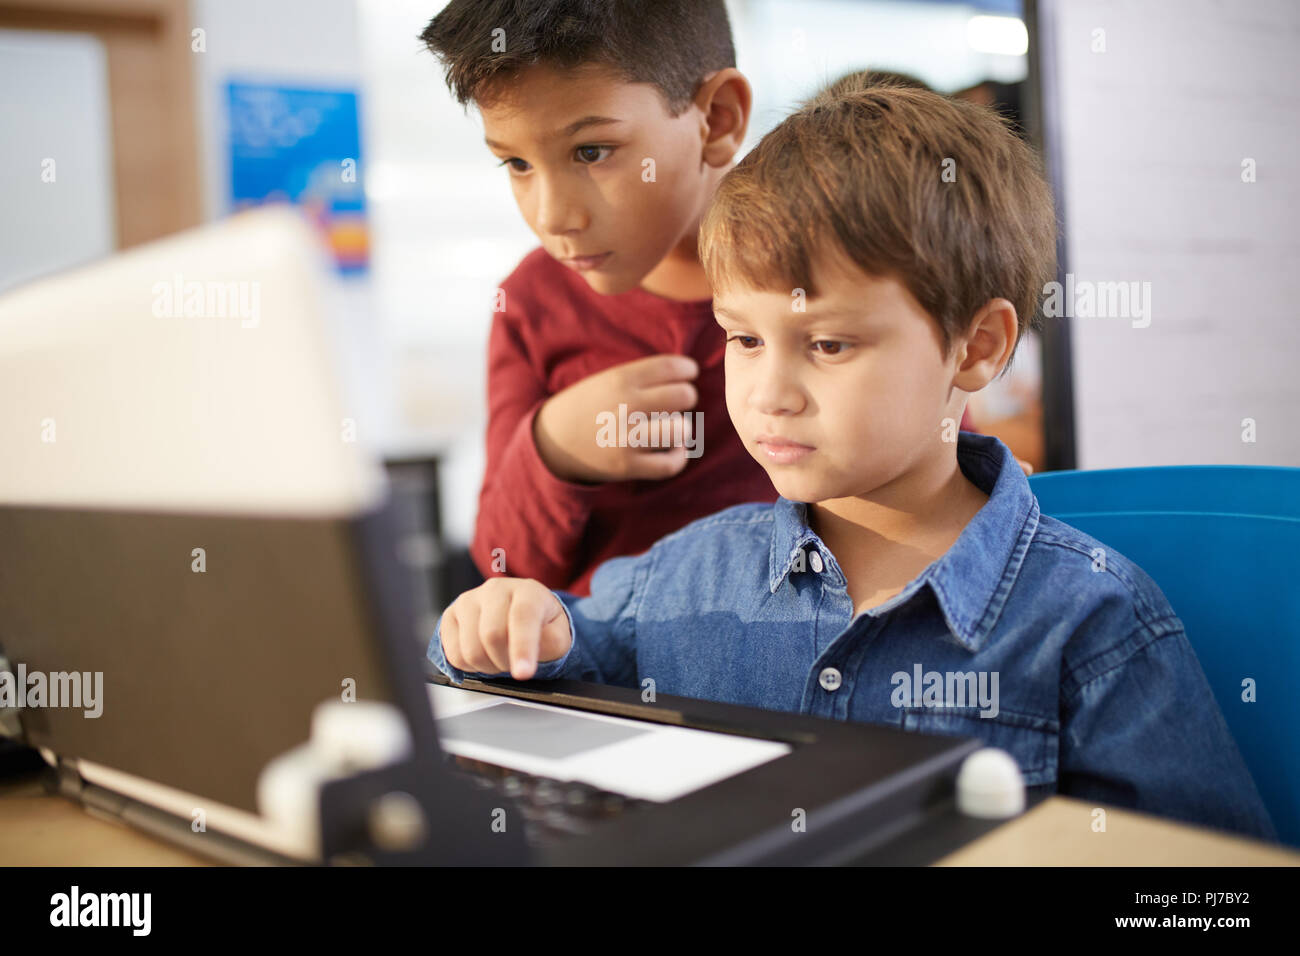 Focused boys using laptop Stock Photo